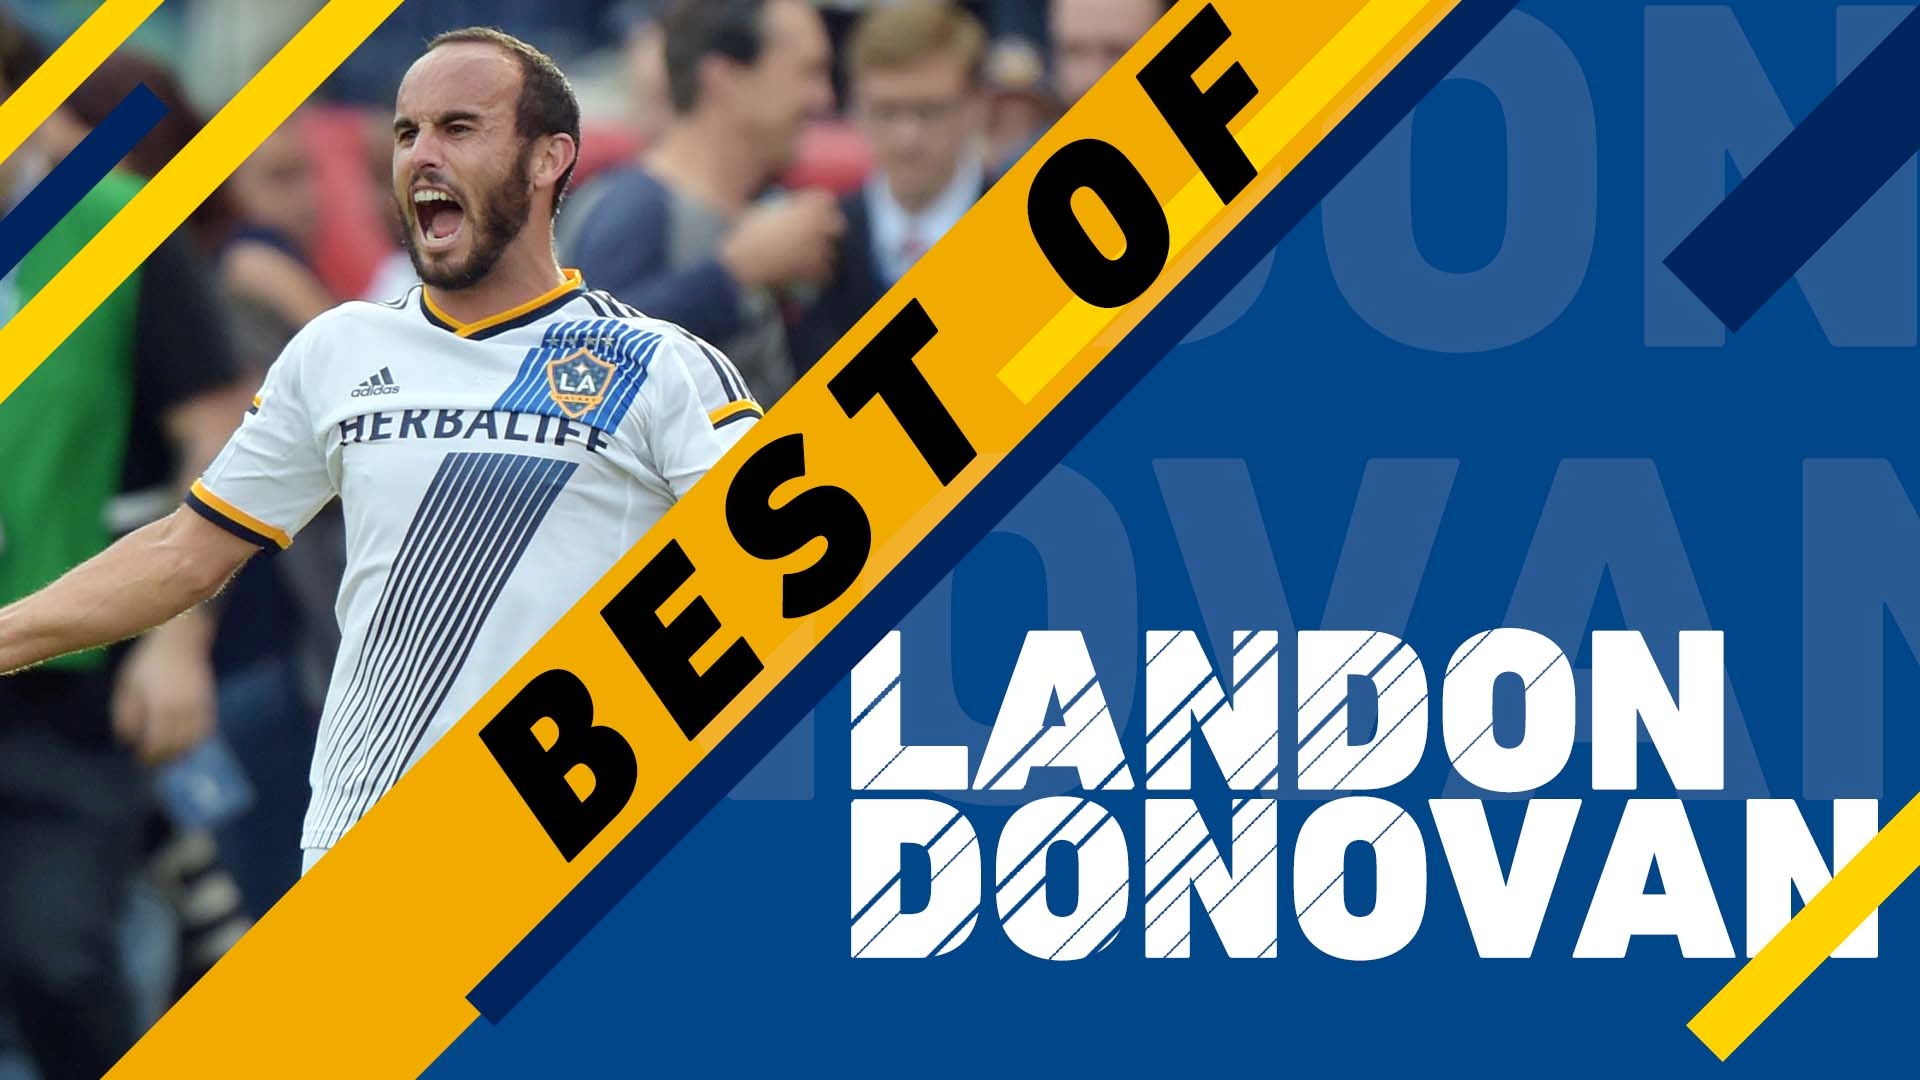 Video via MLS: Best of Landon Donovan